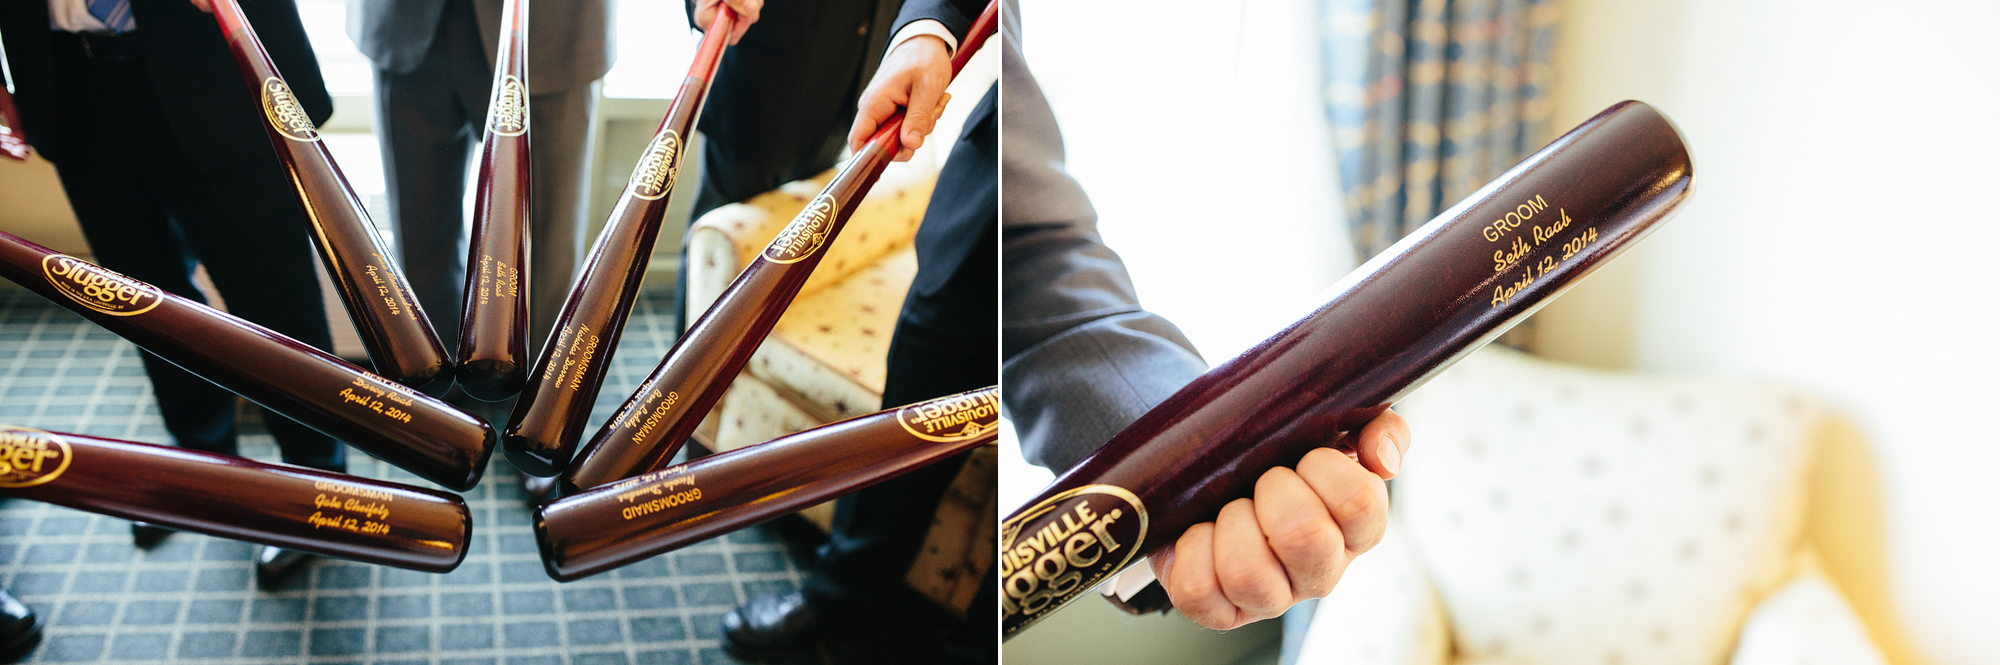 The groom got his groomsmen baseball bats as a gift!